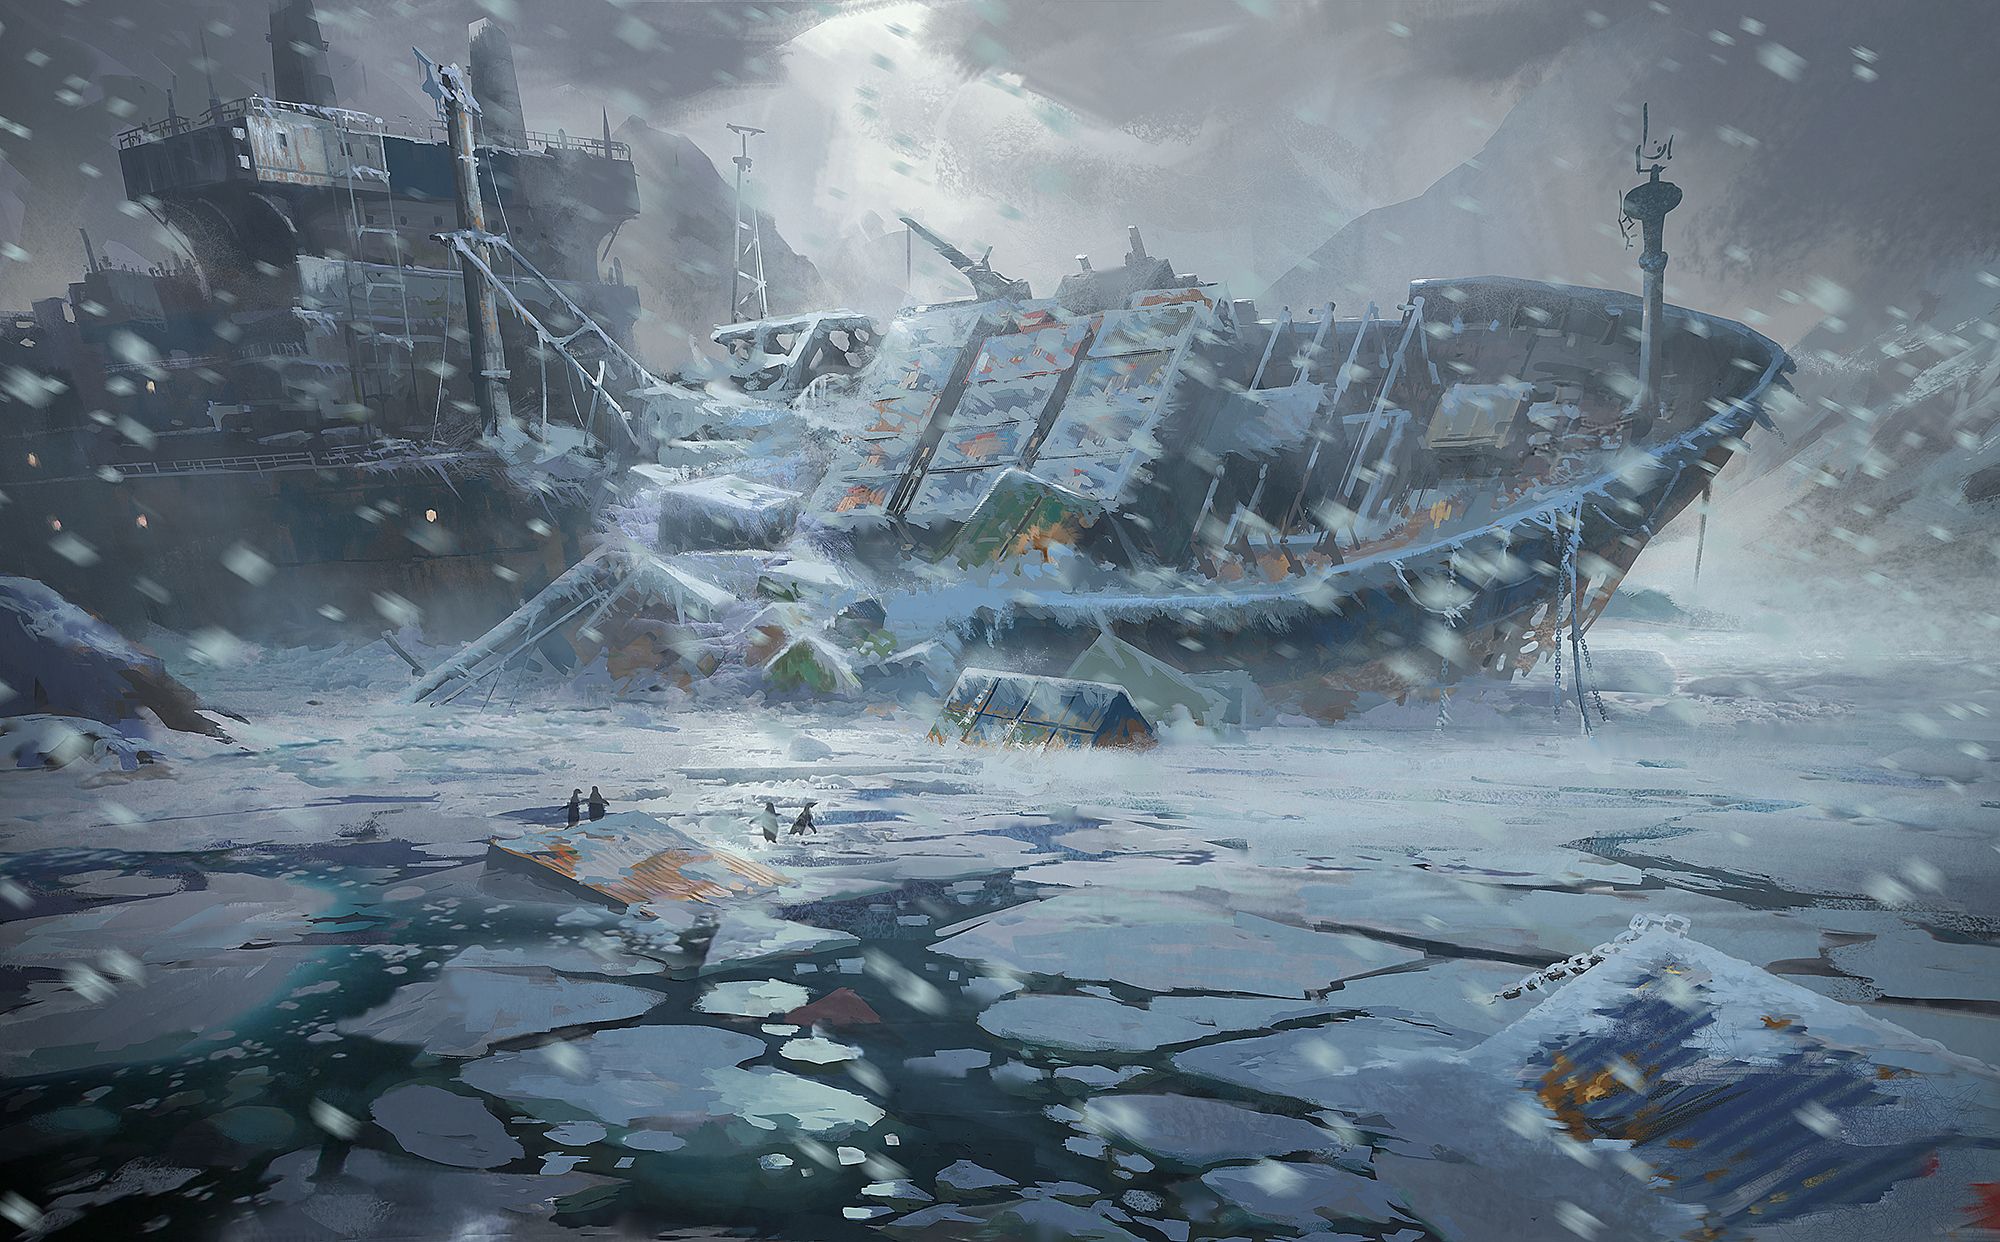 Apocalyptic Dark Horror Winter Snow Ship Wreck Ruins Ice Sci Fi Fantasy Wallpaperx1242